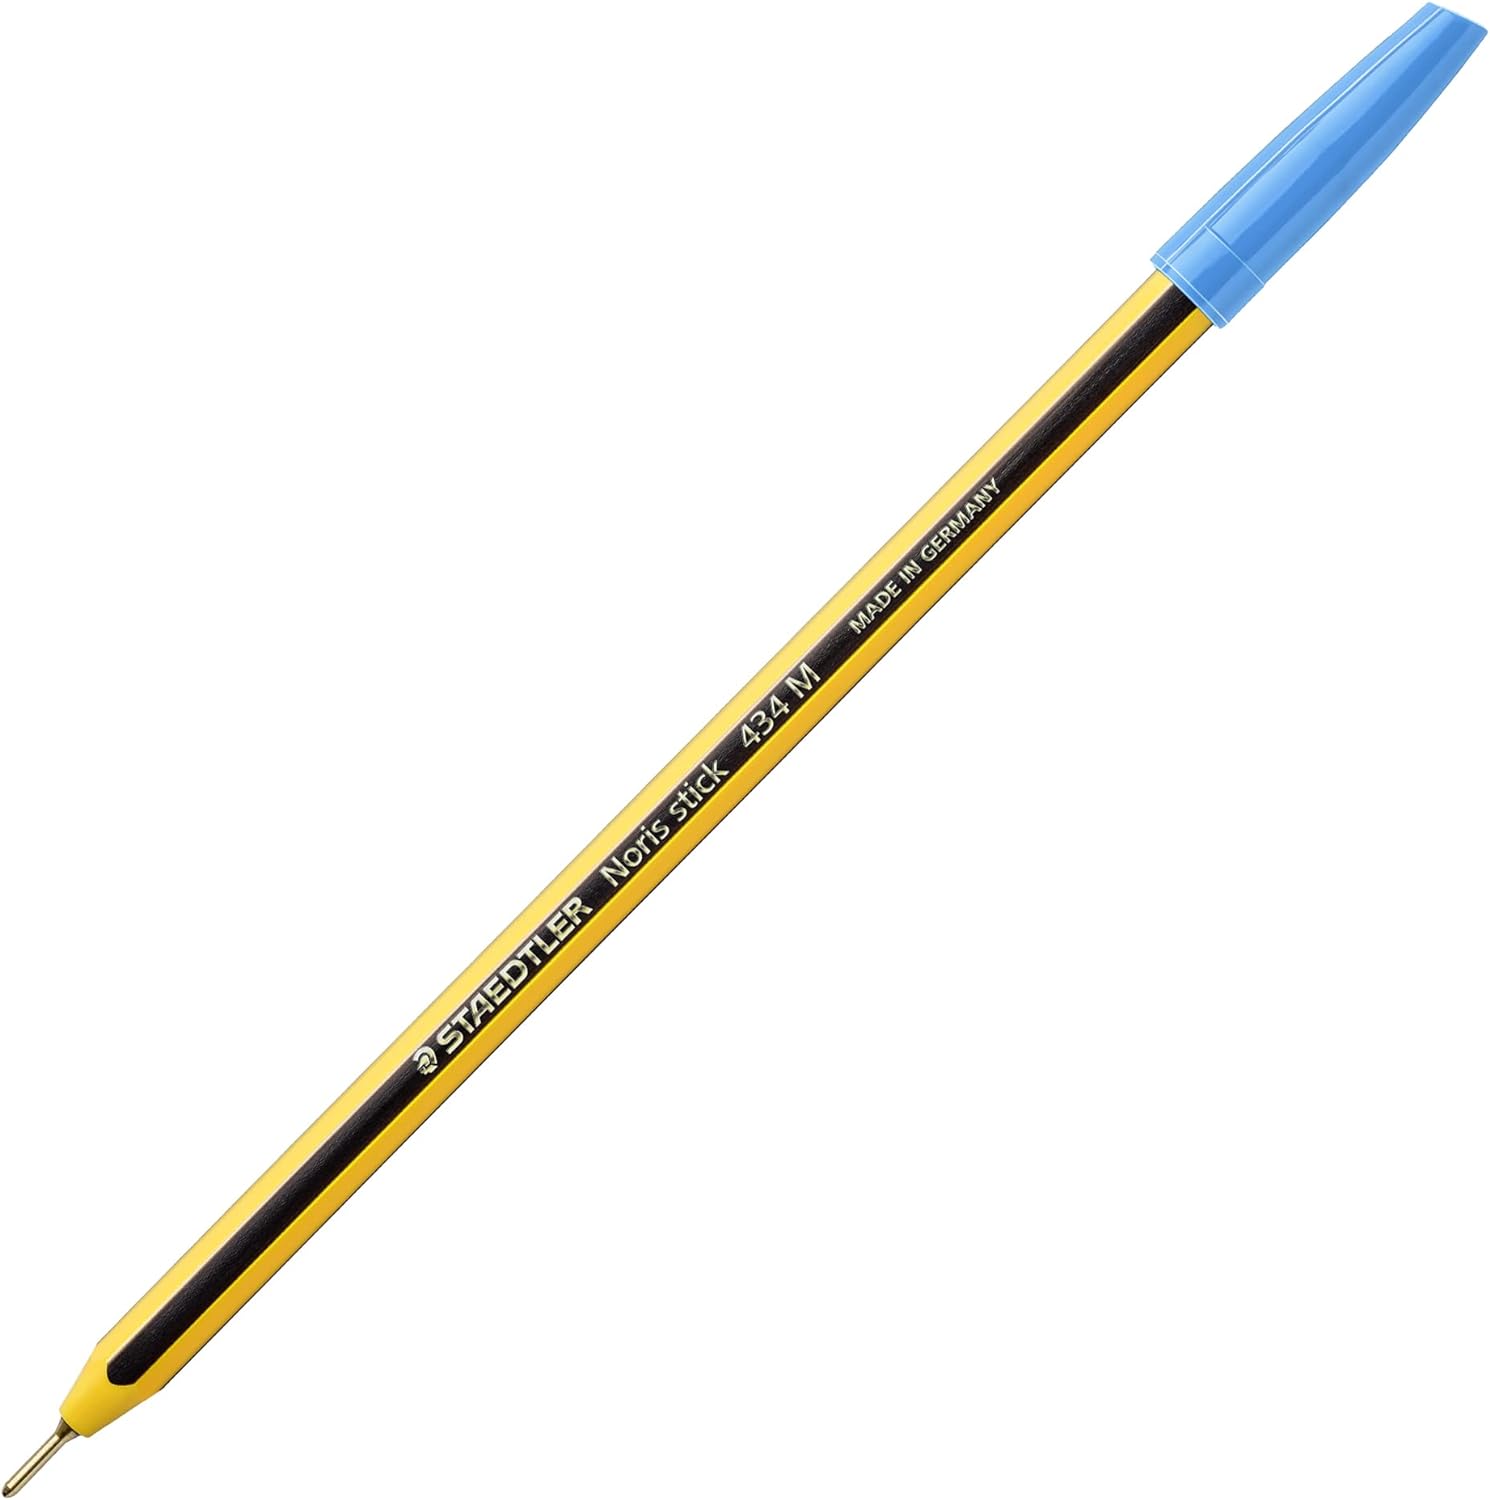 cf. 20 pz. Noris® stick 434 M Penna a sfera colore azzurro